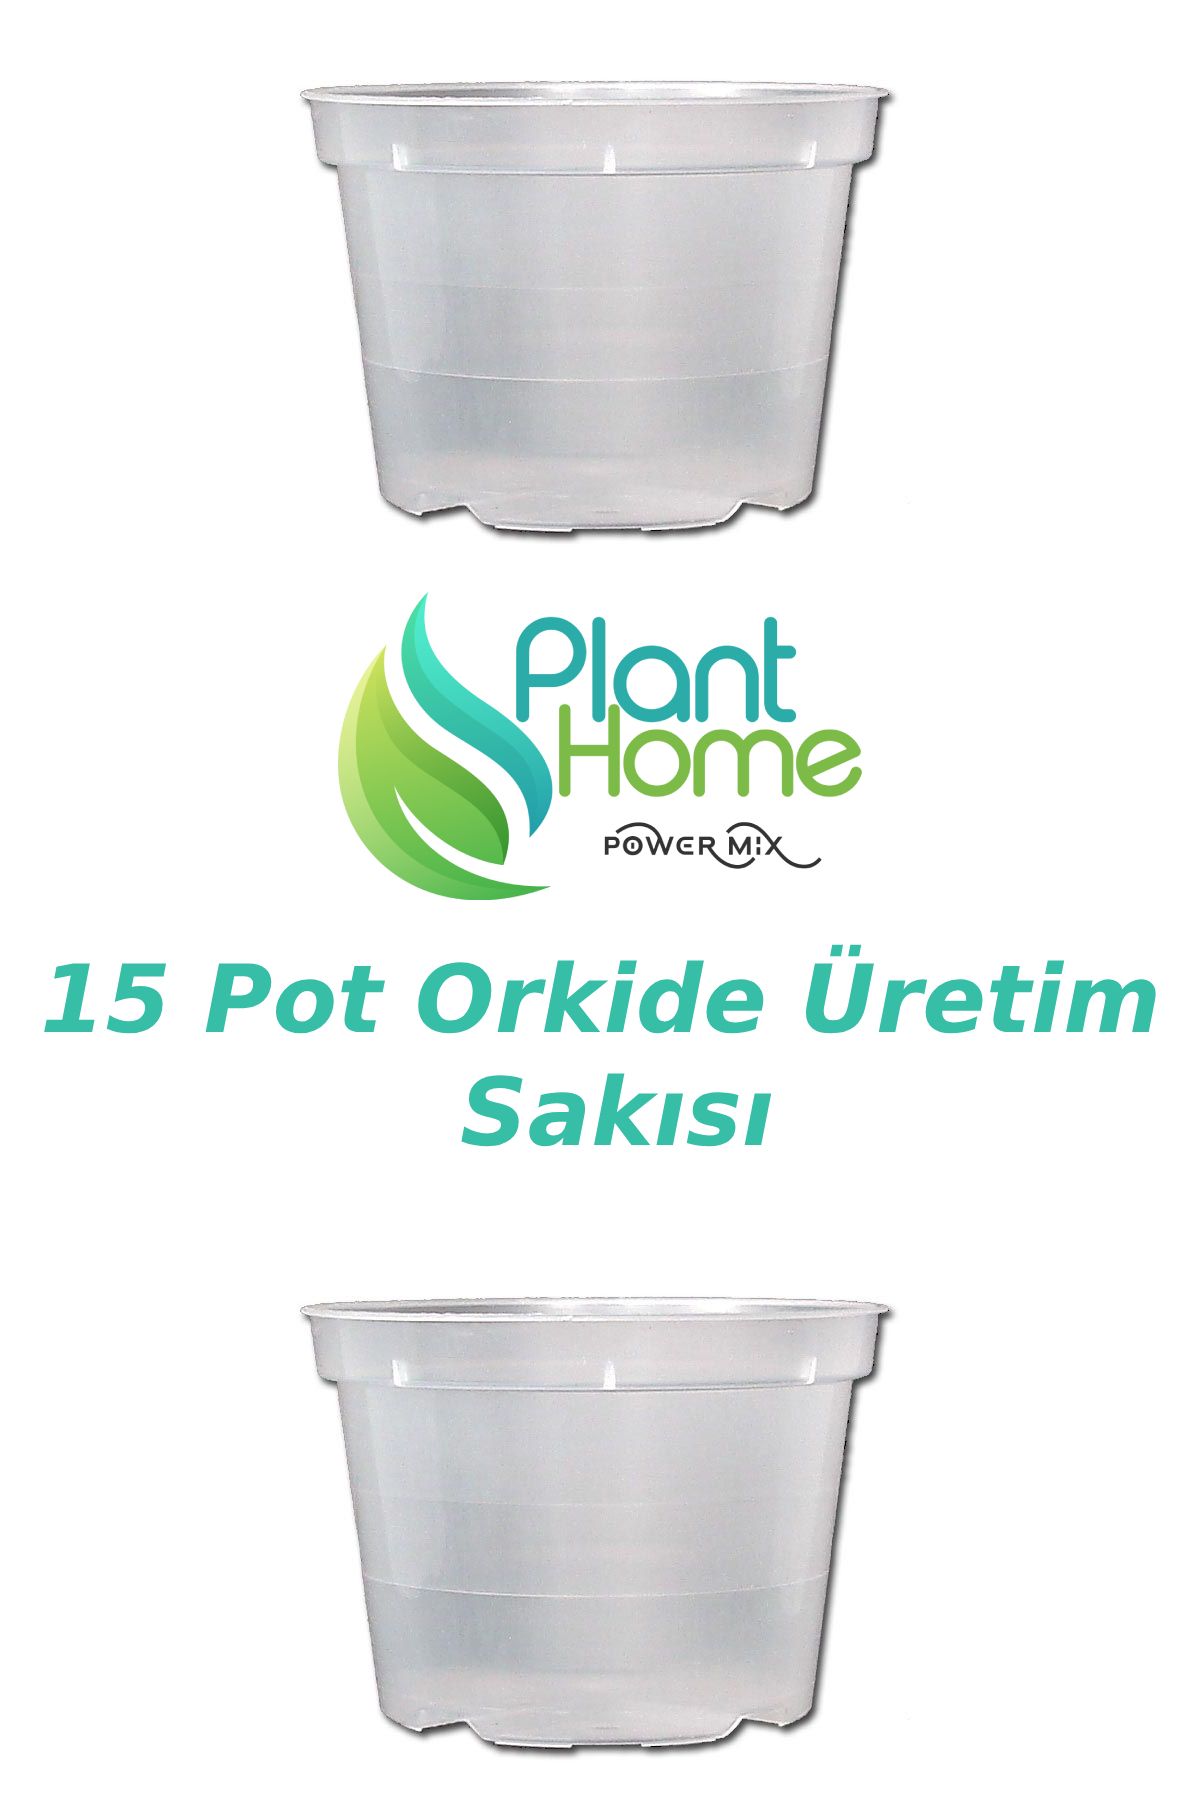 plant-home 15 Pot Orkide Üretim Saksısı - 2 Adet